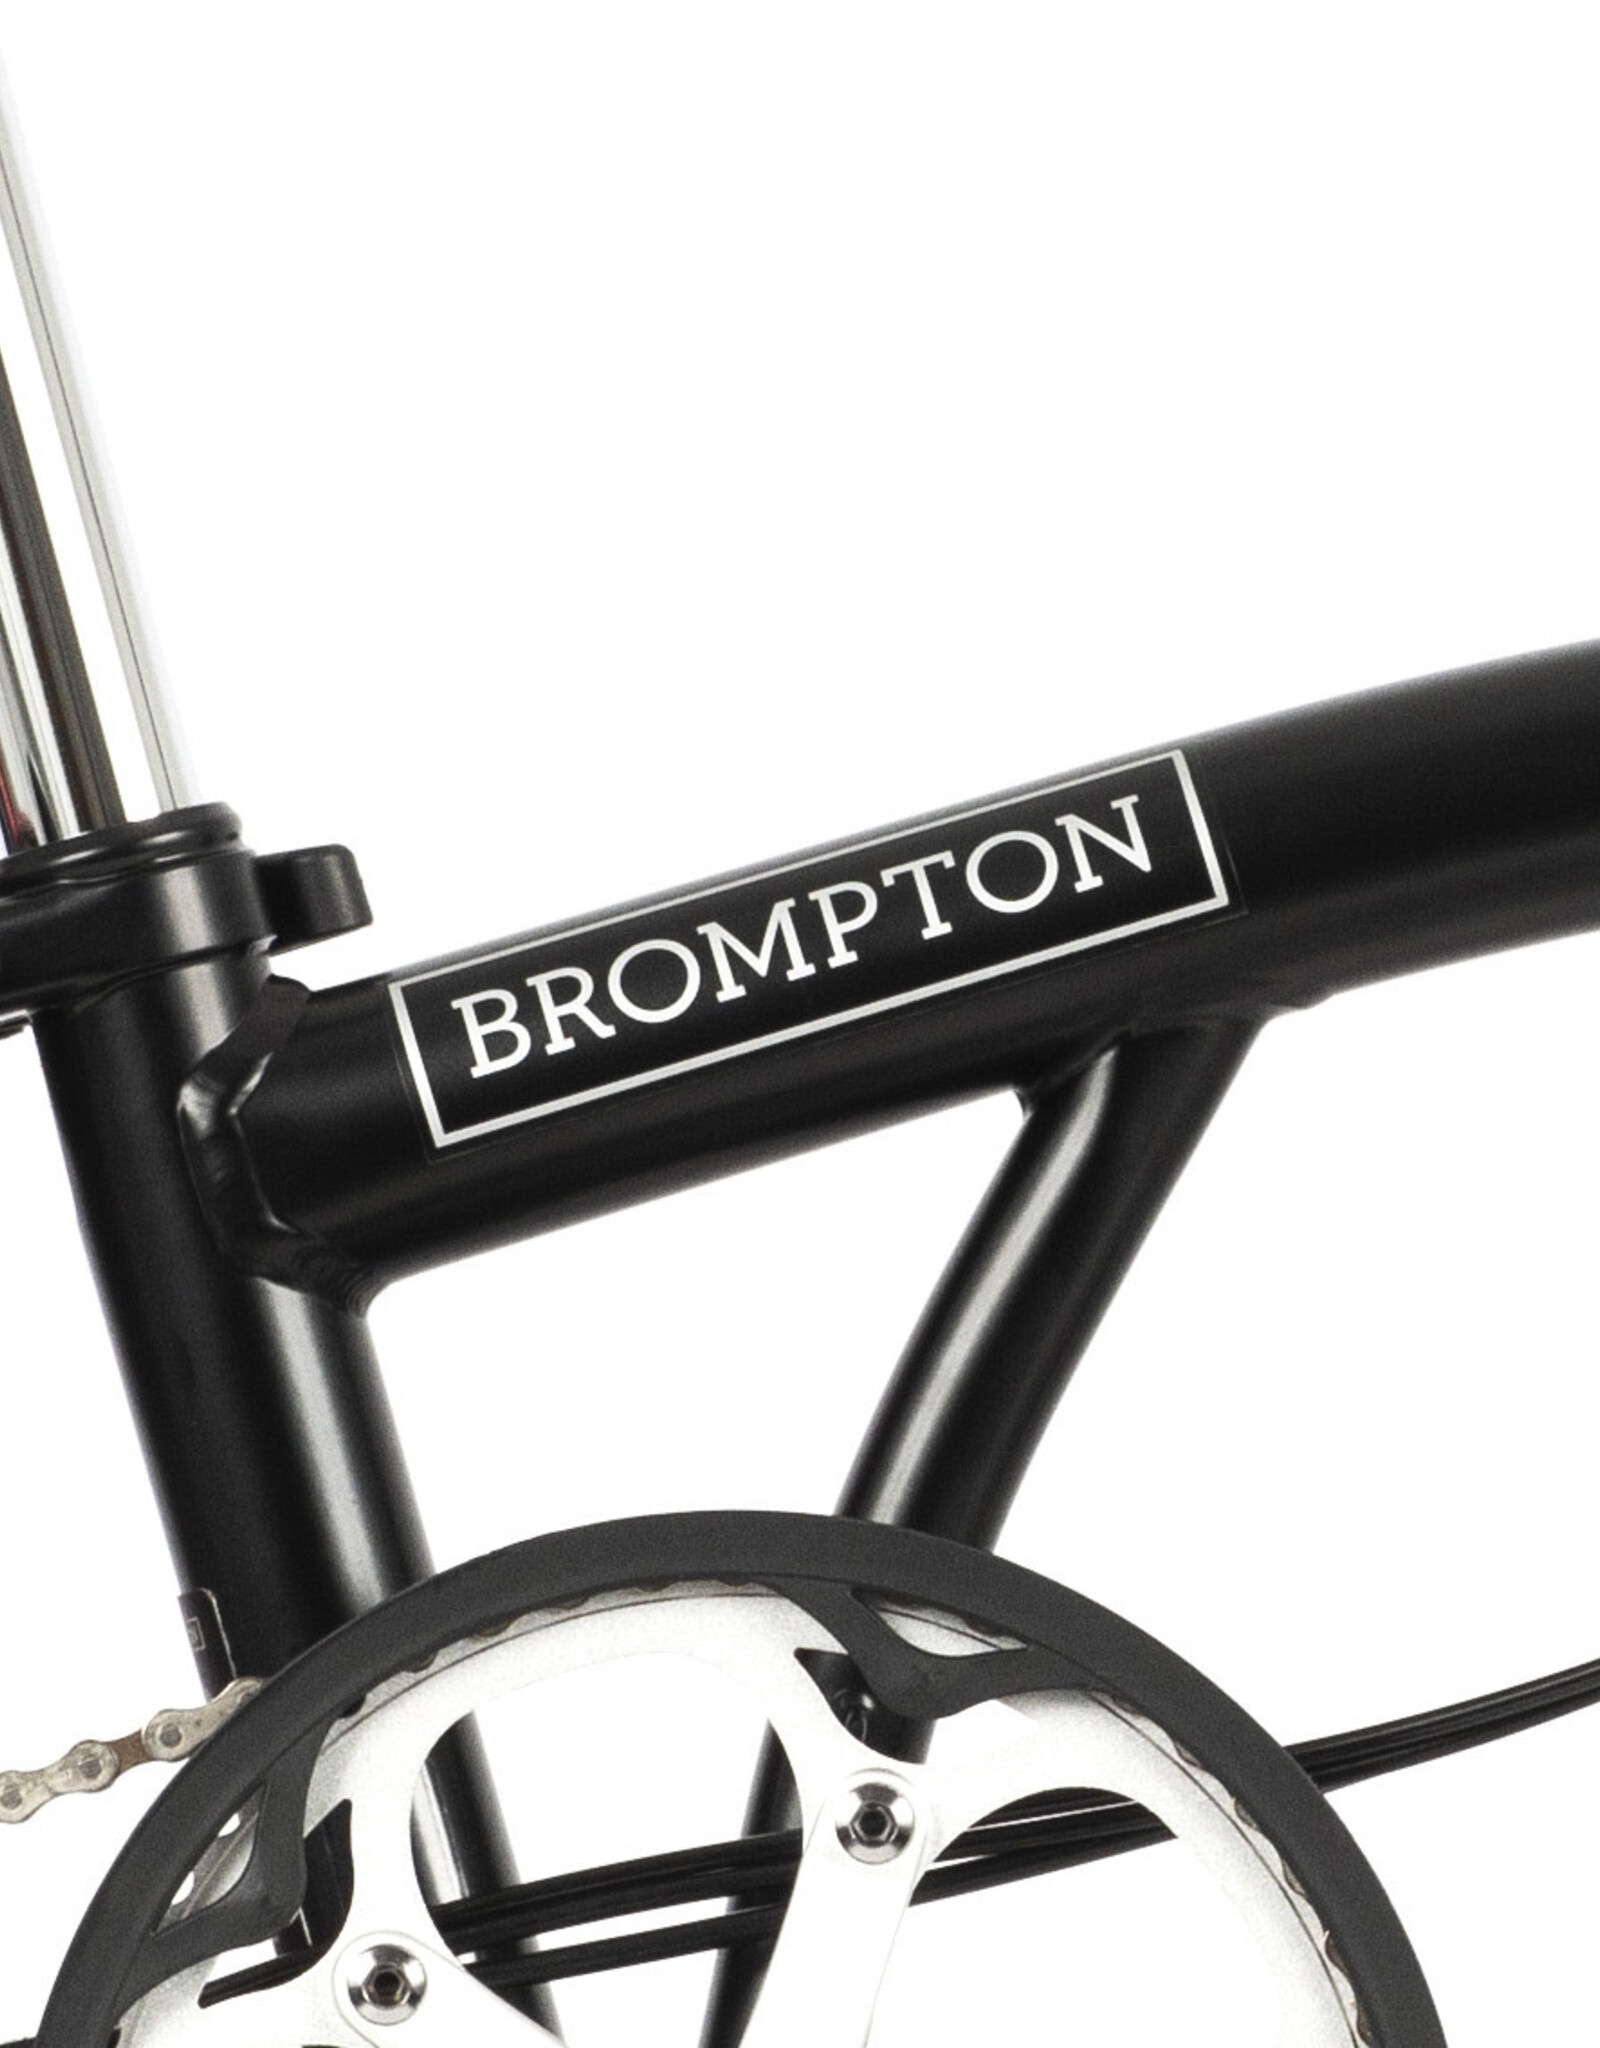 Brompton Brompton - Bike - C line 6 speed, Matte Black, M handlebar, 167mm Wide Saddle